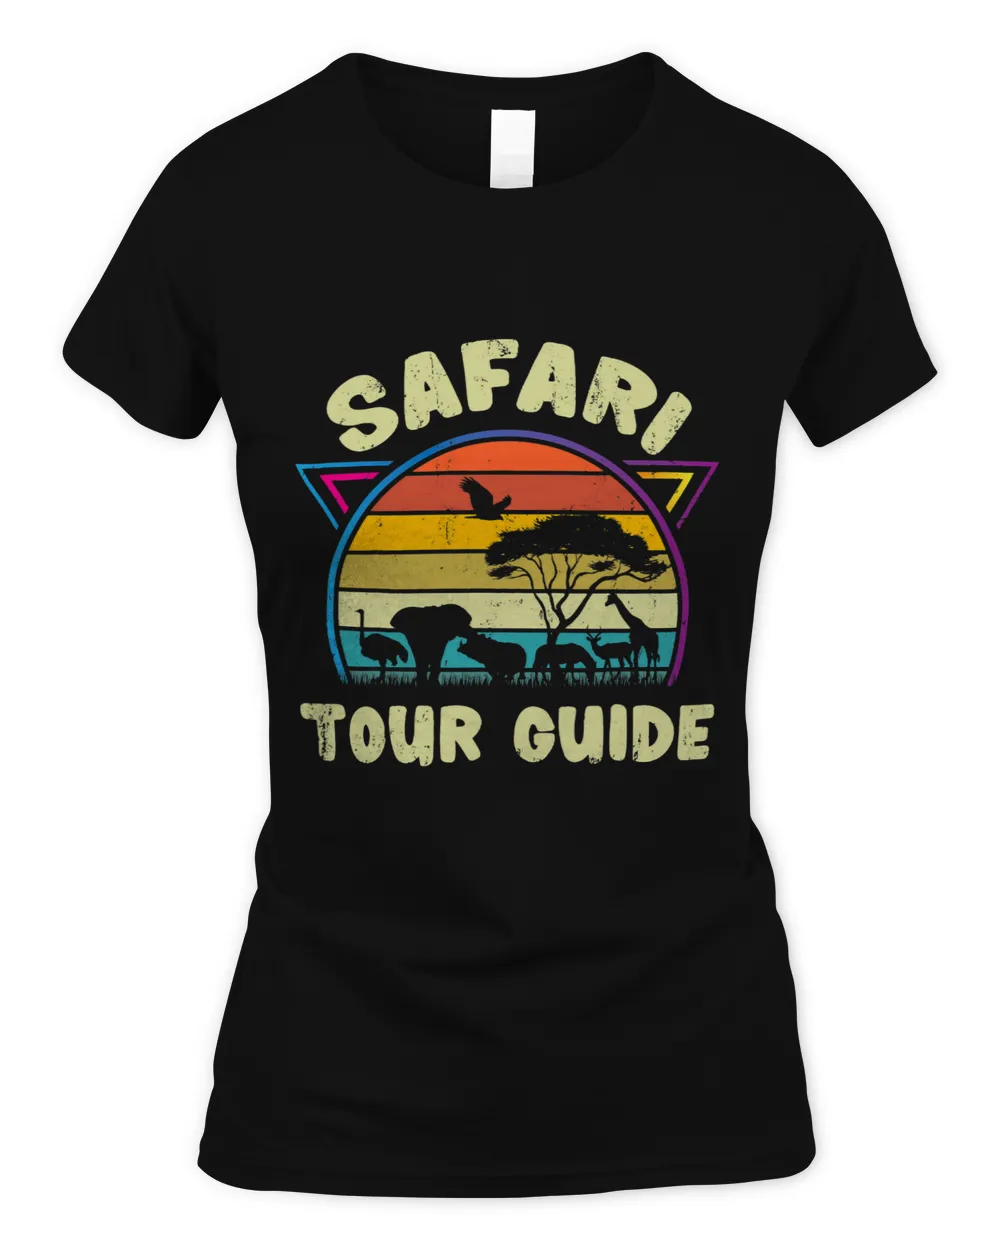 Safari Tour Guide Tanzania Kenya Halloween